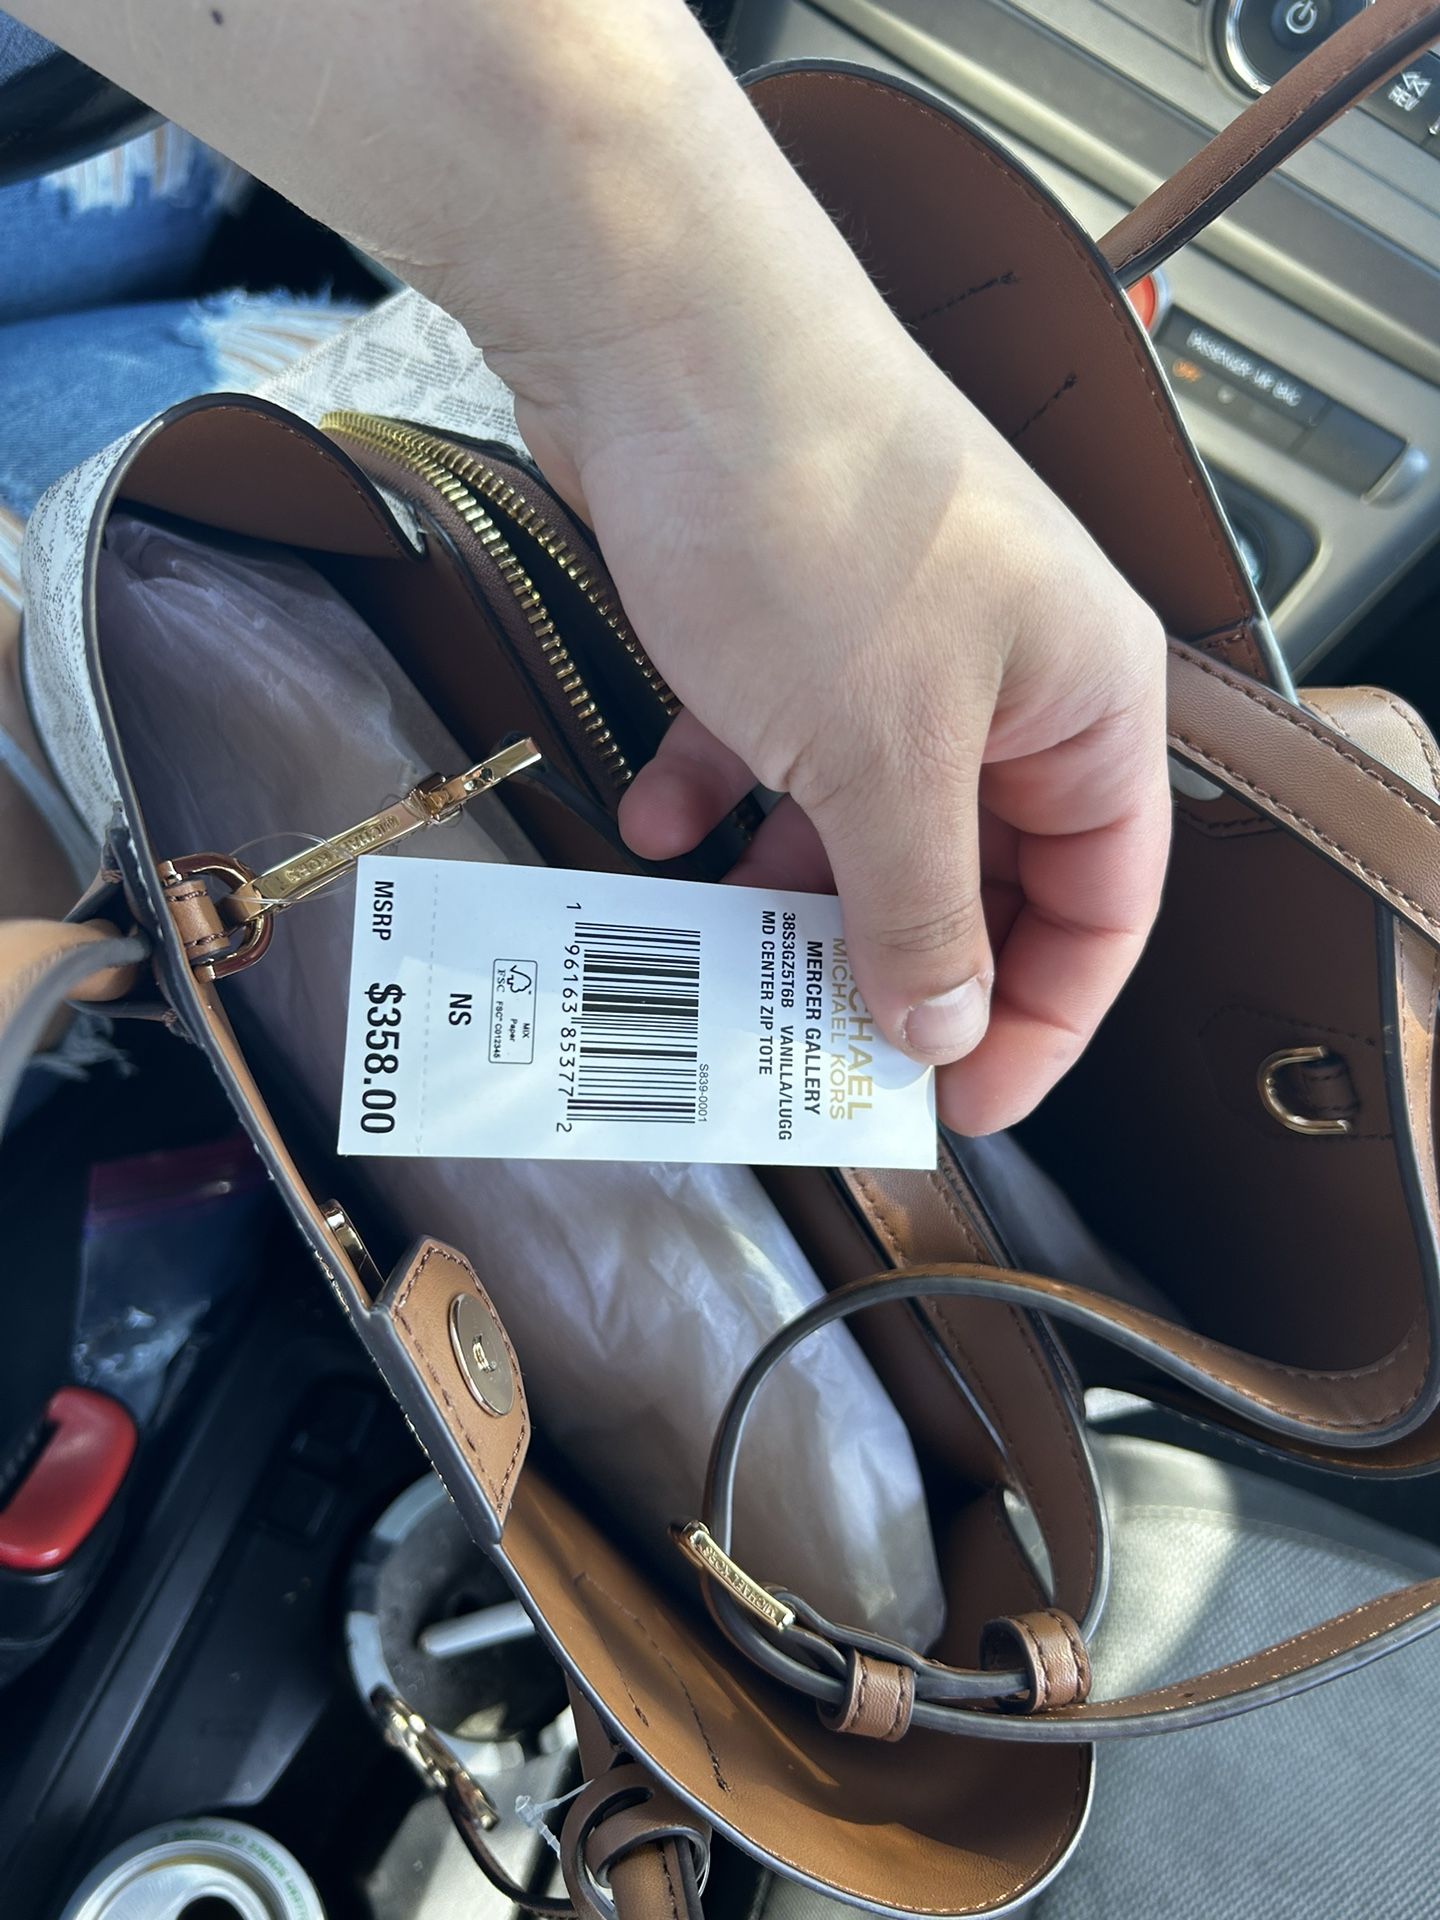 Michael Kors Hamilton Satchel Bag for Sale in Los Angeles, CA - OfferUp